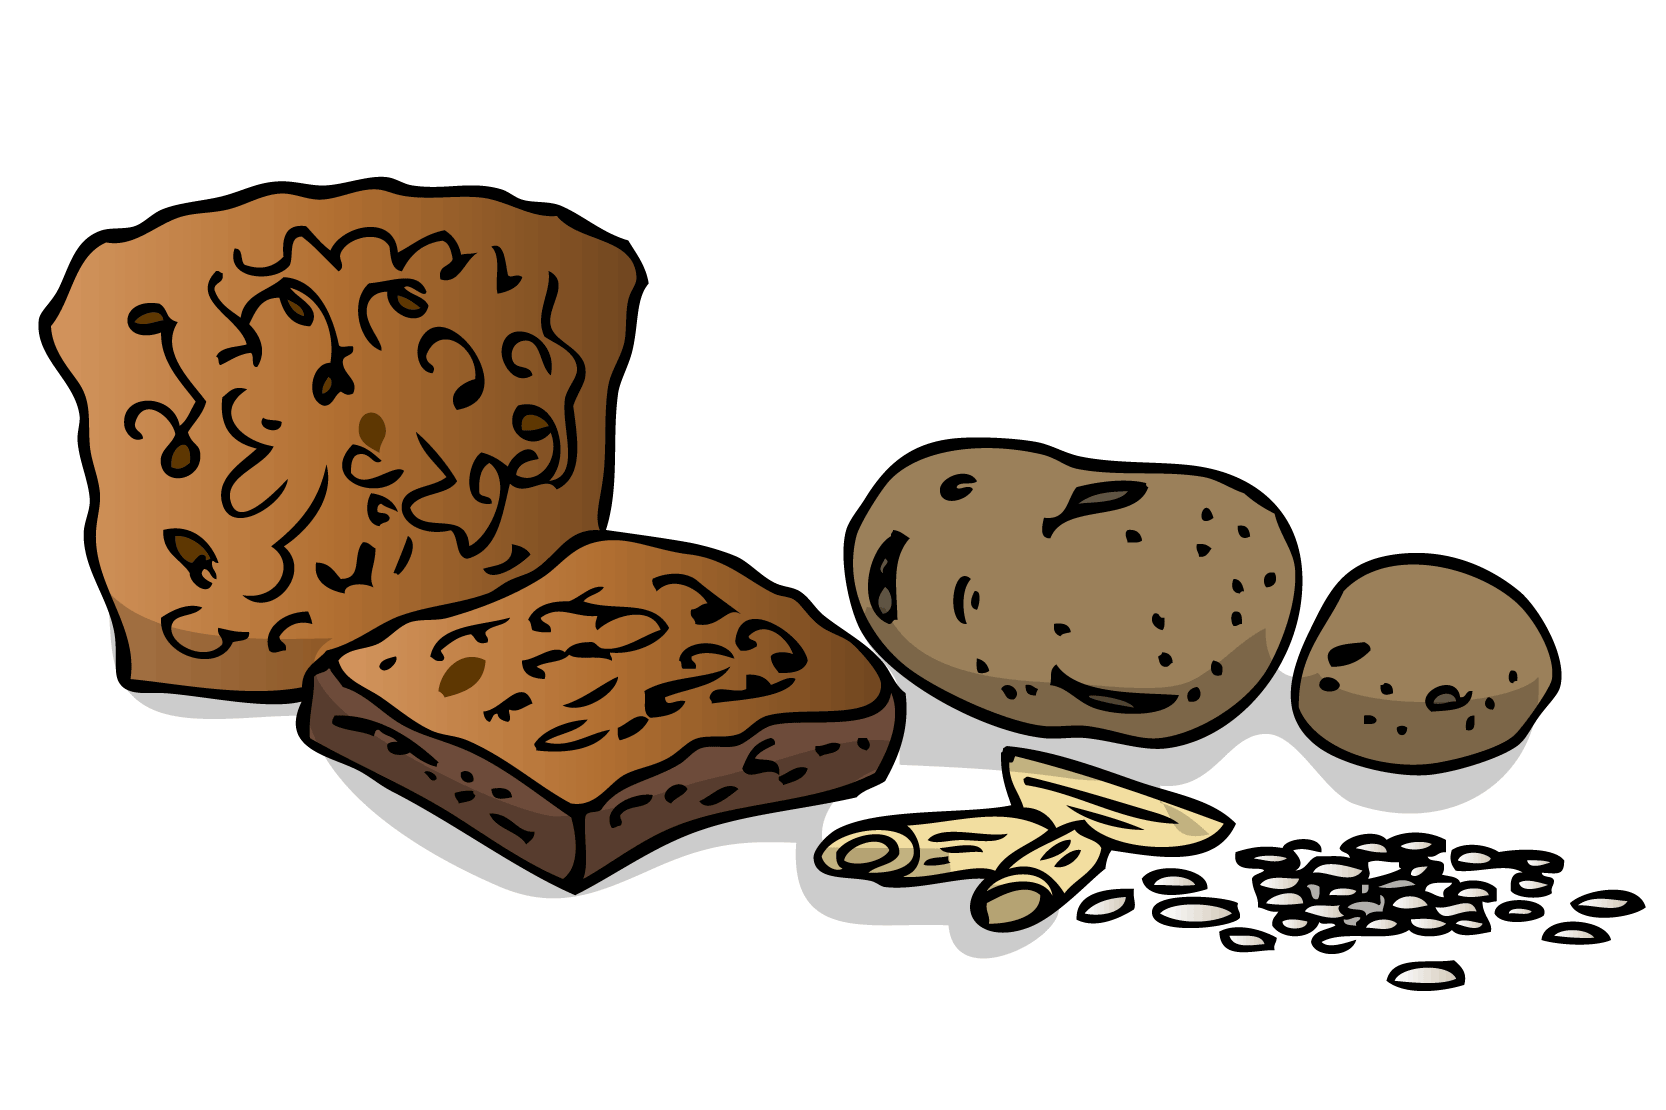 Bröd, potatis, pasta. Illustration.